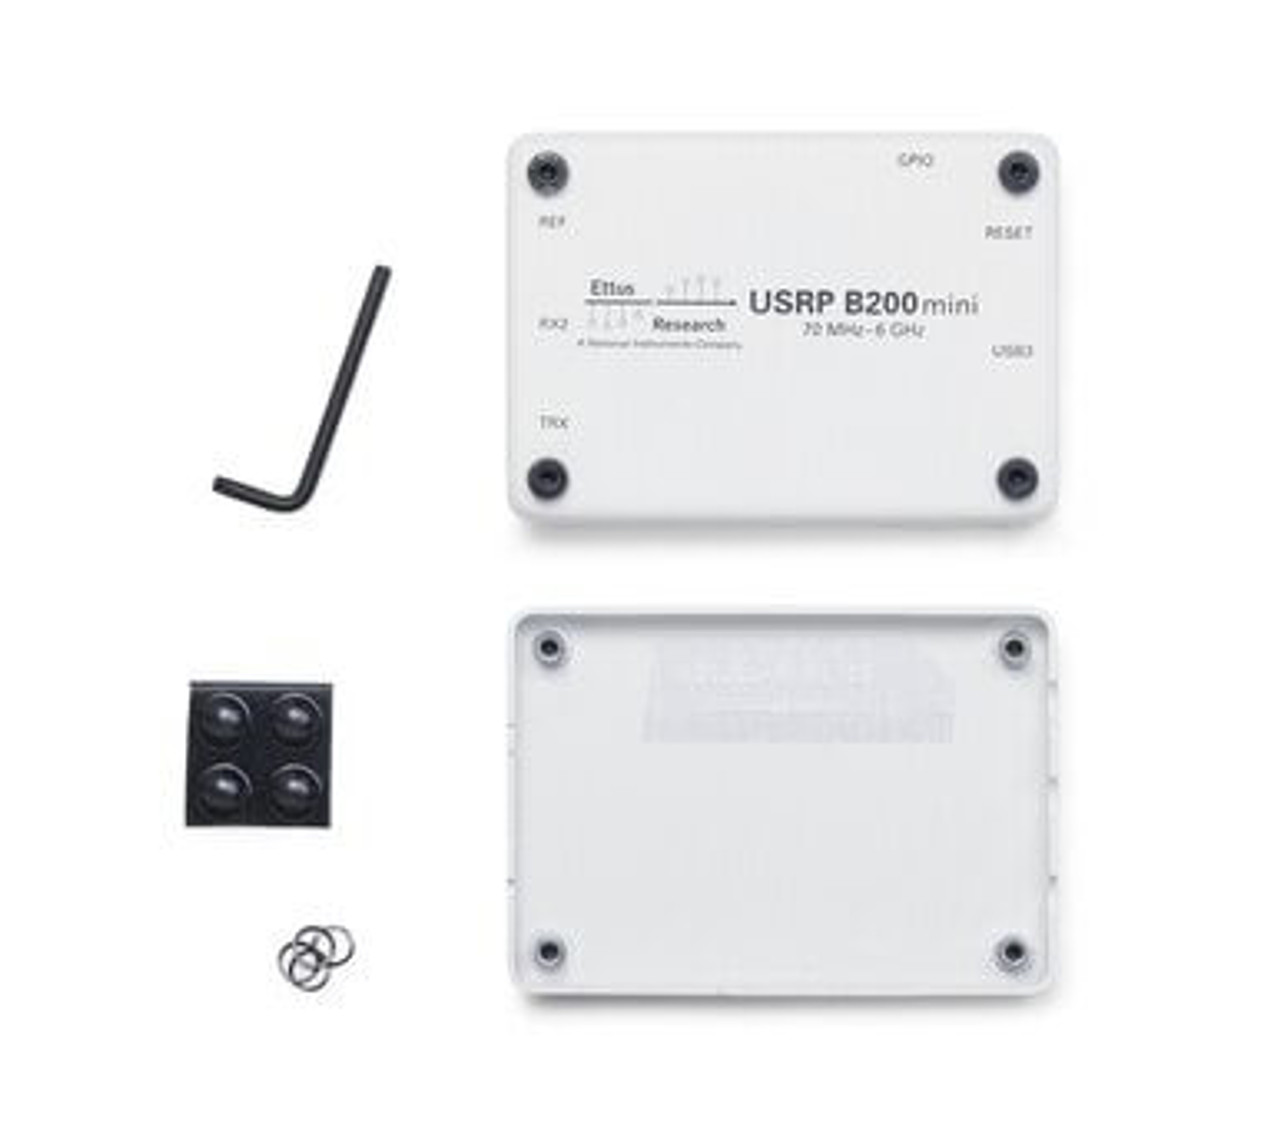 Enclosure Kit for Ettus USRP B200mini Digilent